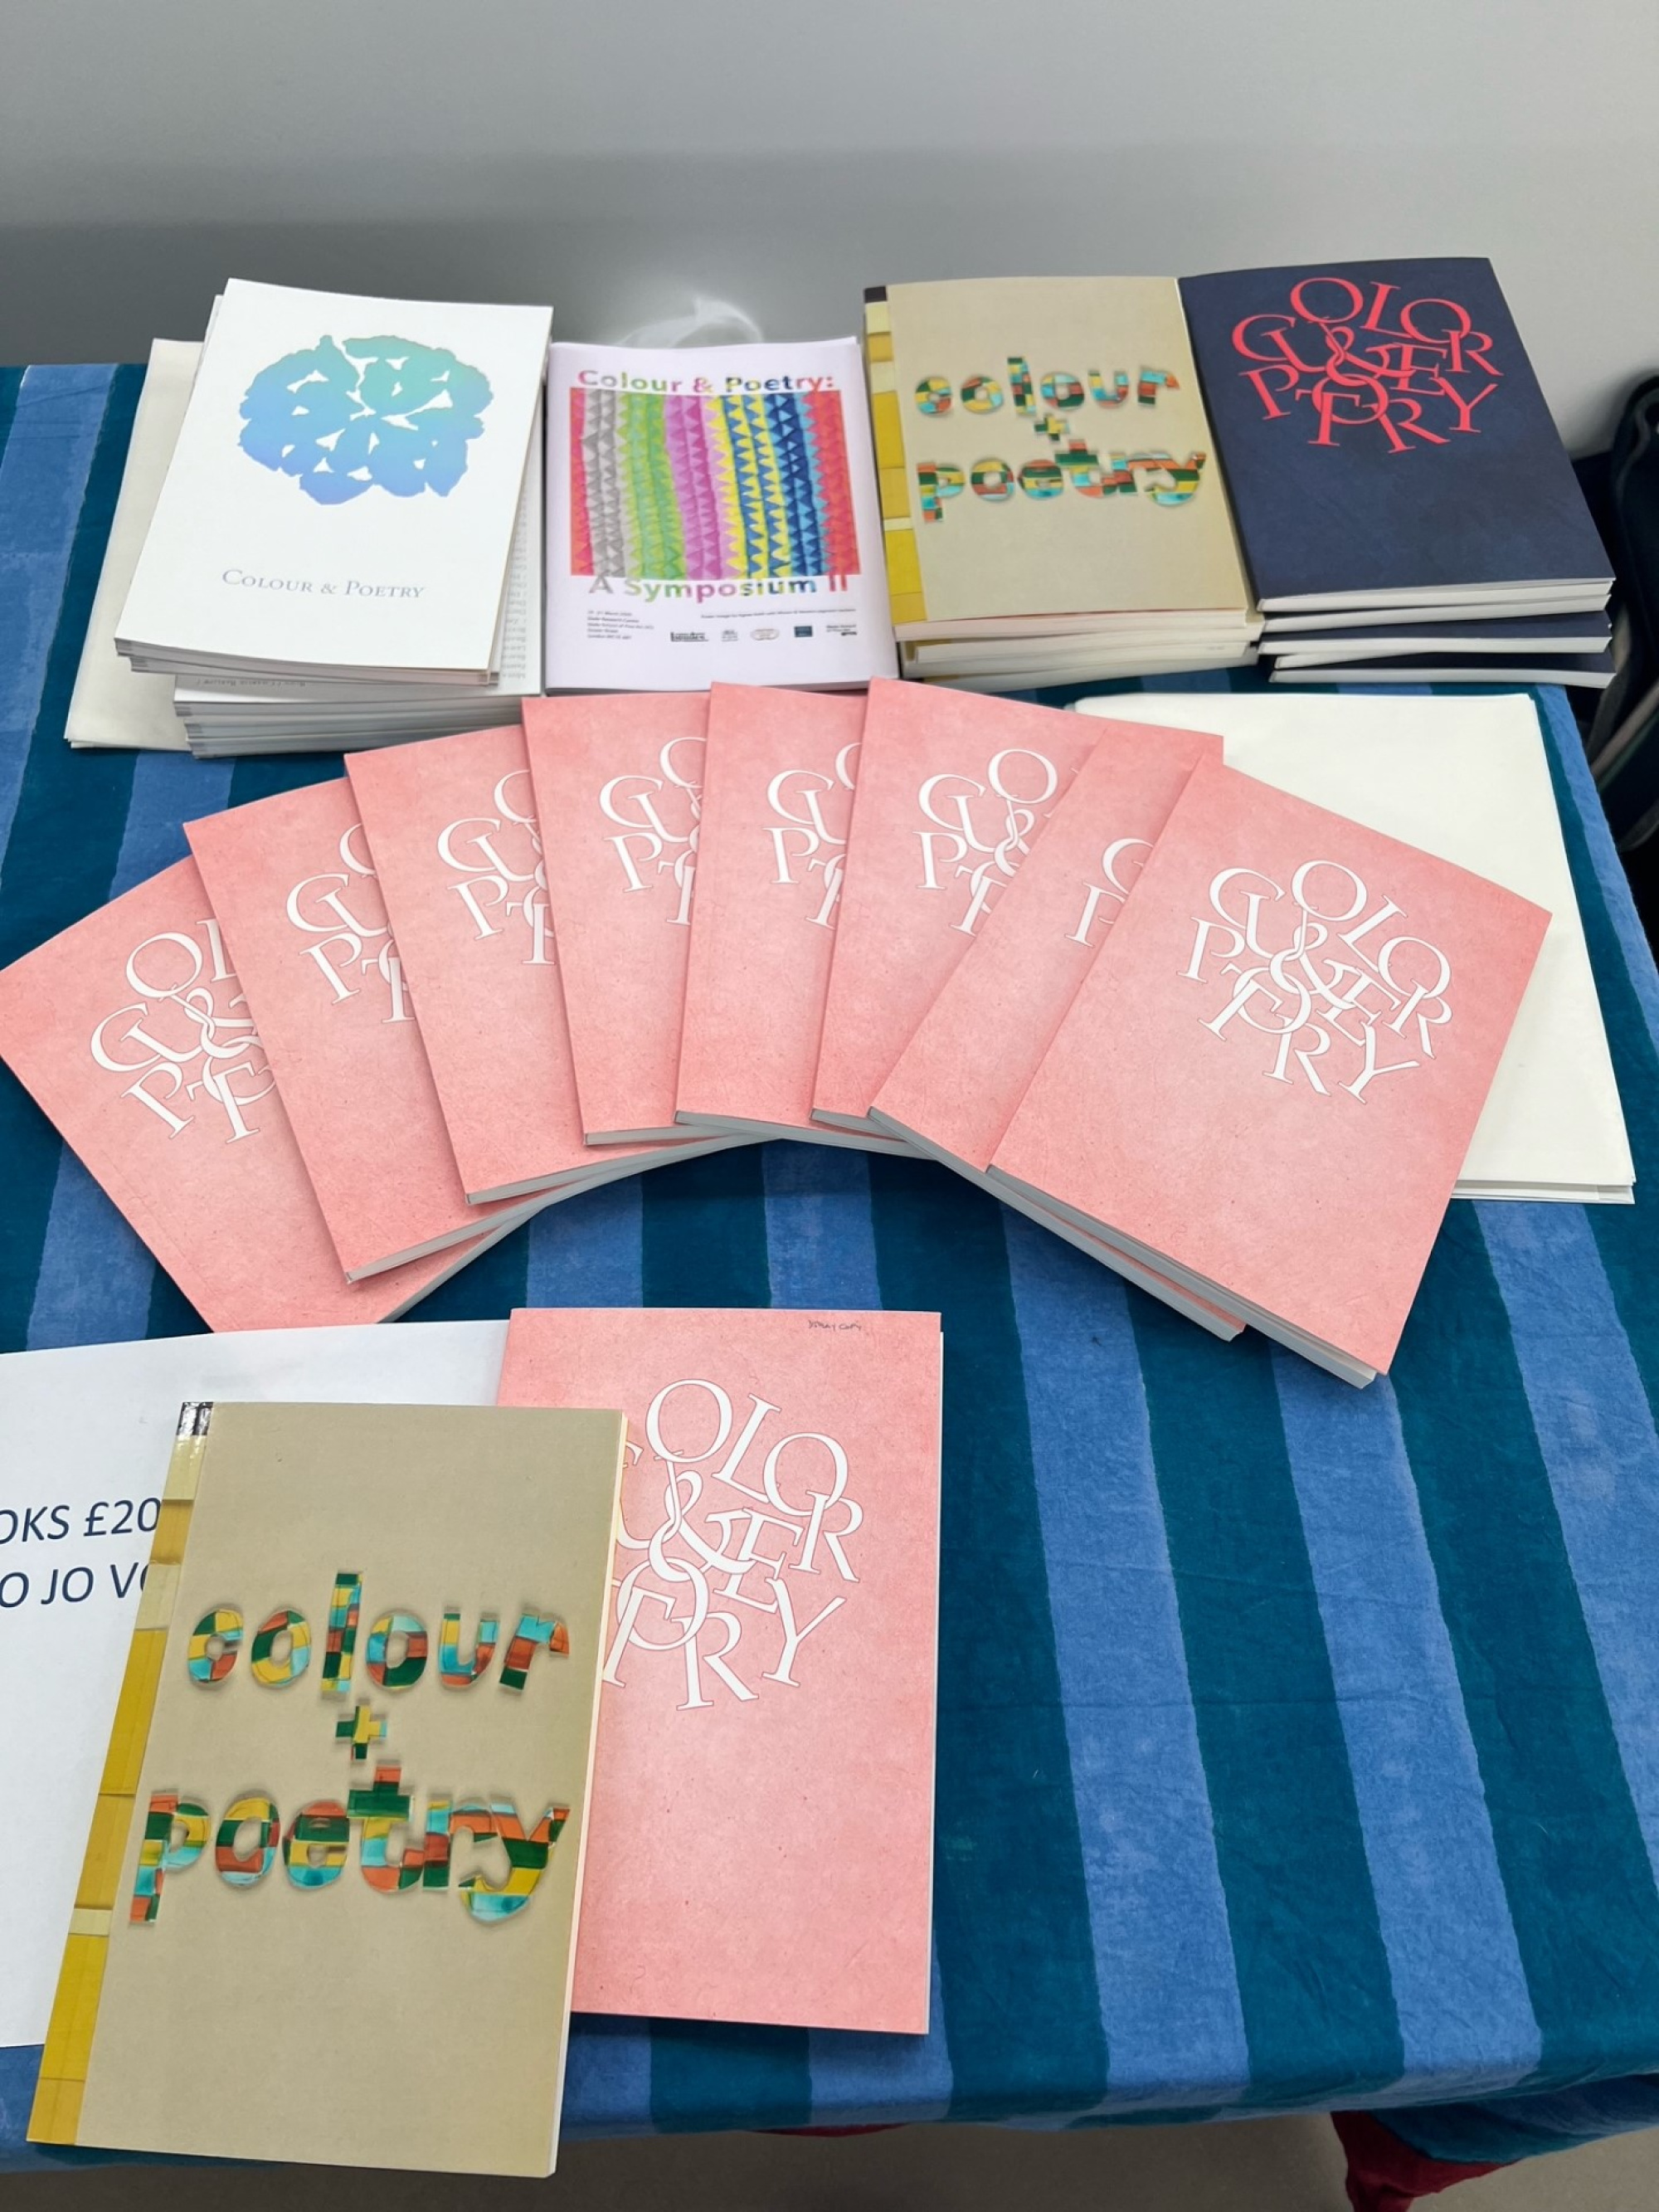 Colour & Poetry: A Symposium V publication launch